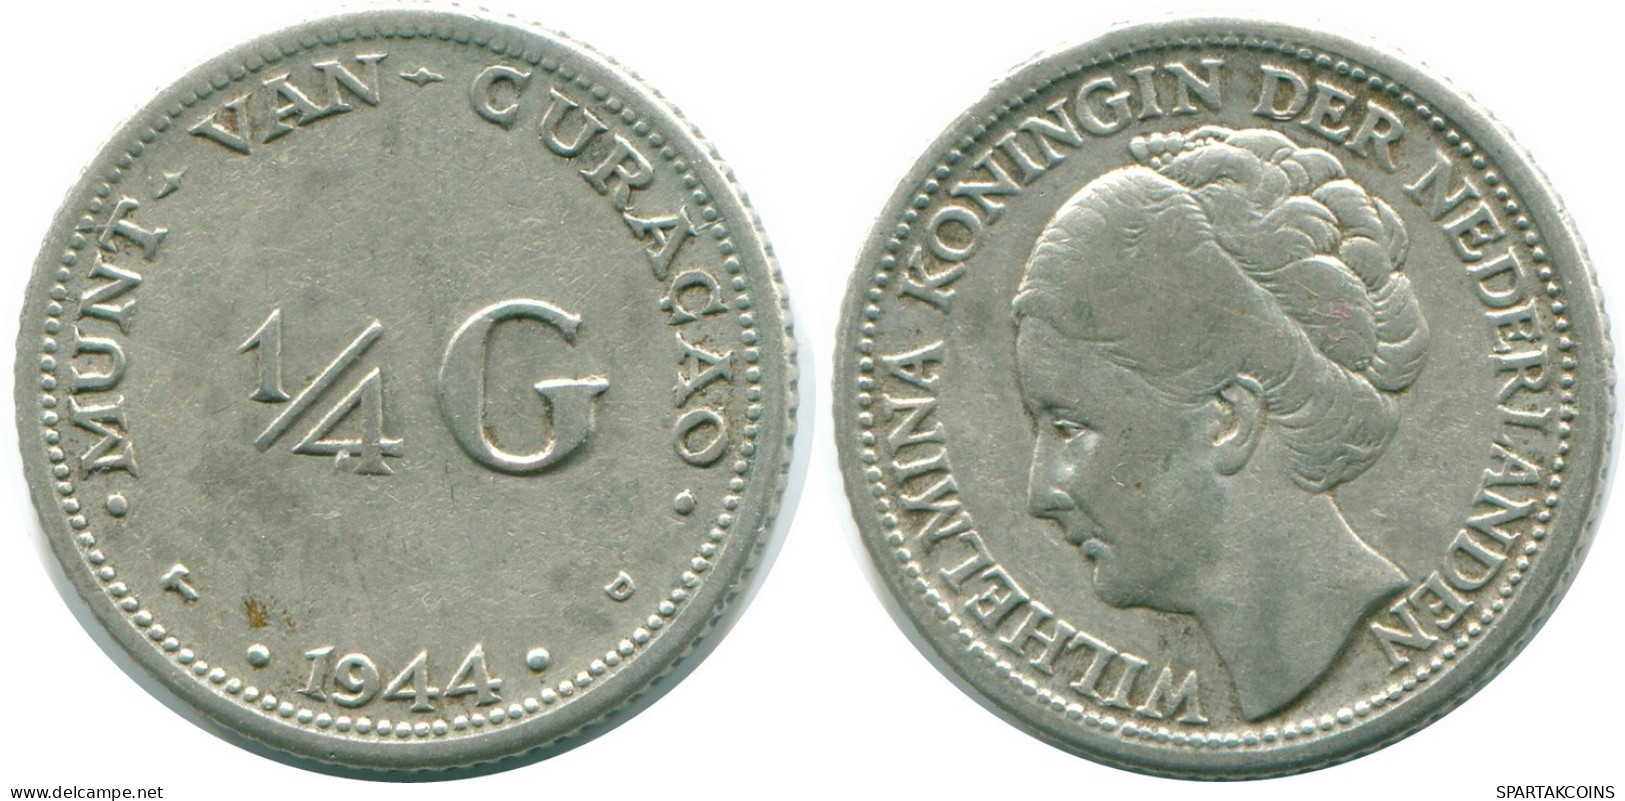 1/4 GULDEN 1944 CURACAO Netherlands SILVER Colonial Coin #NL10557.4.U.A - Curacao